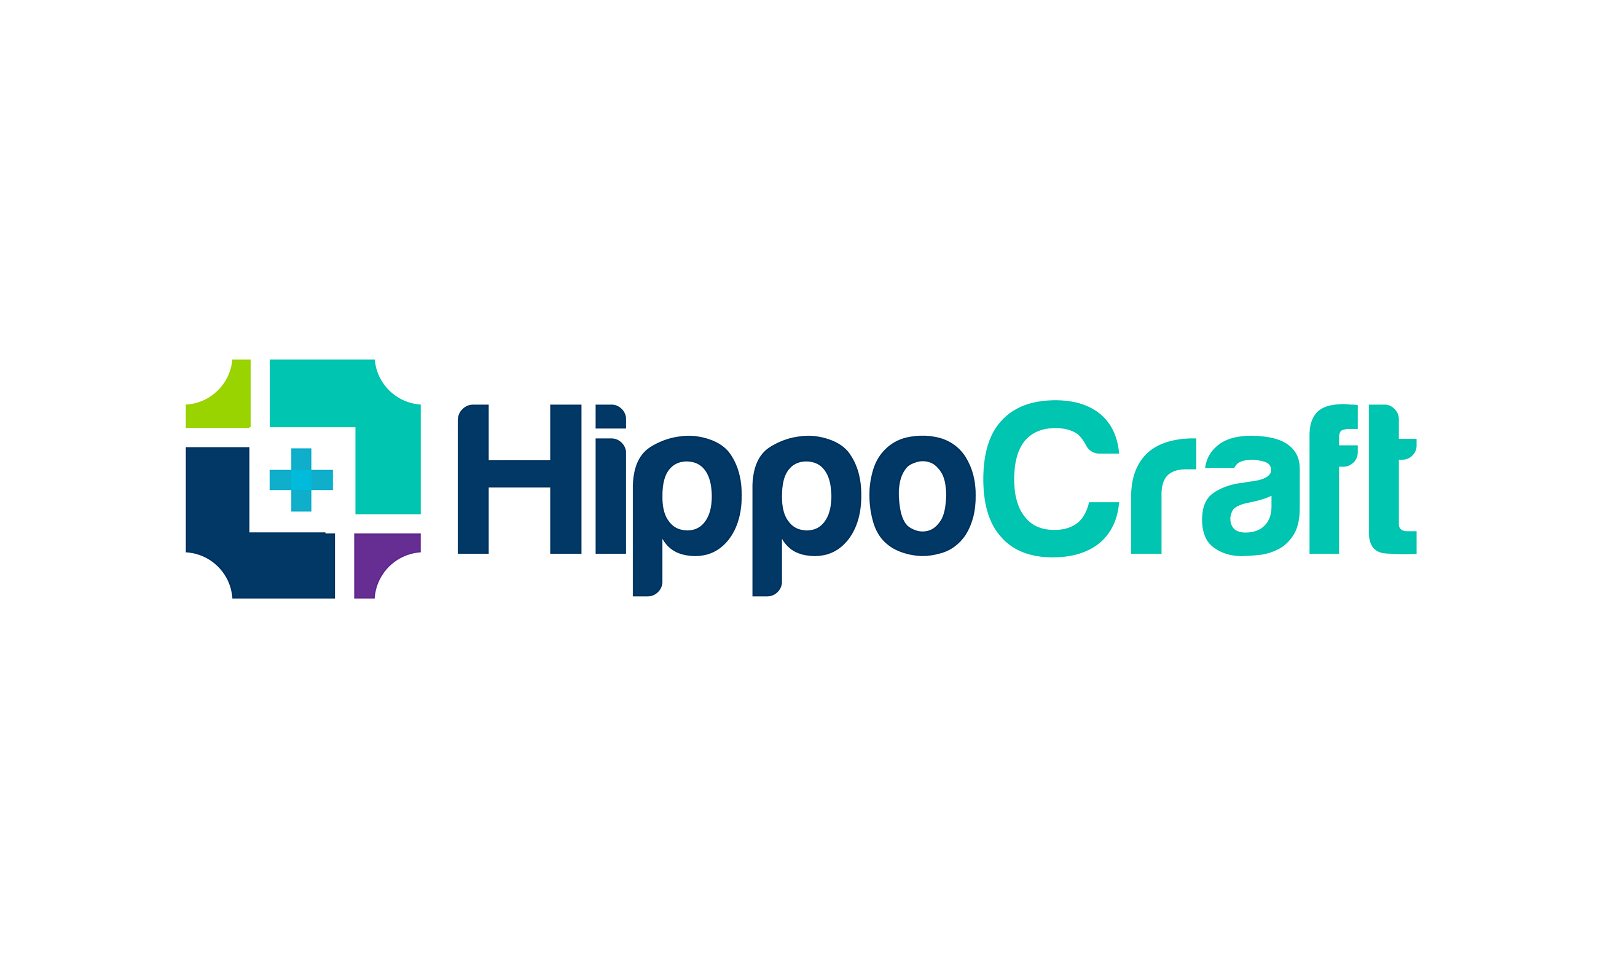 Hippocraft.com - Creative brandable domain for sale